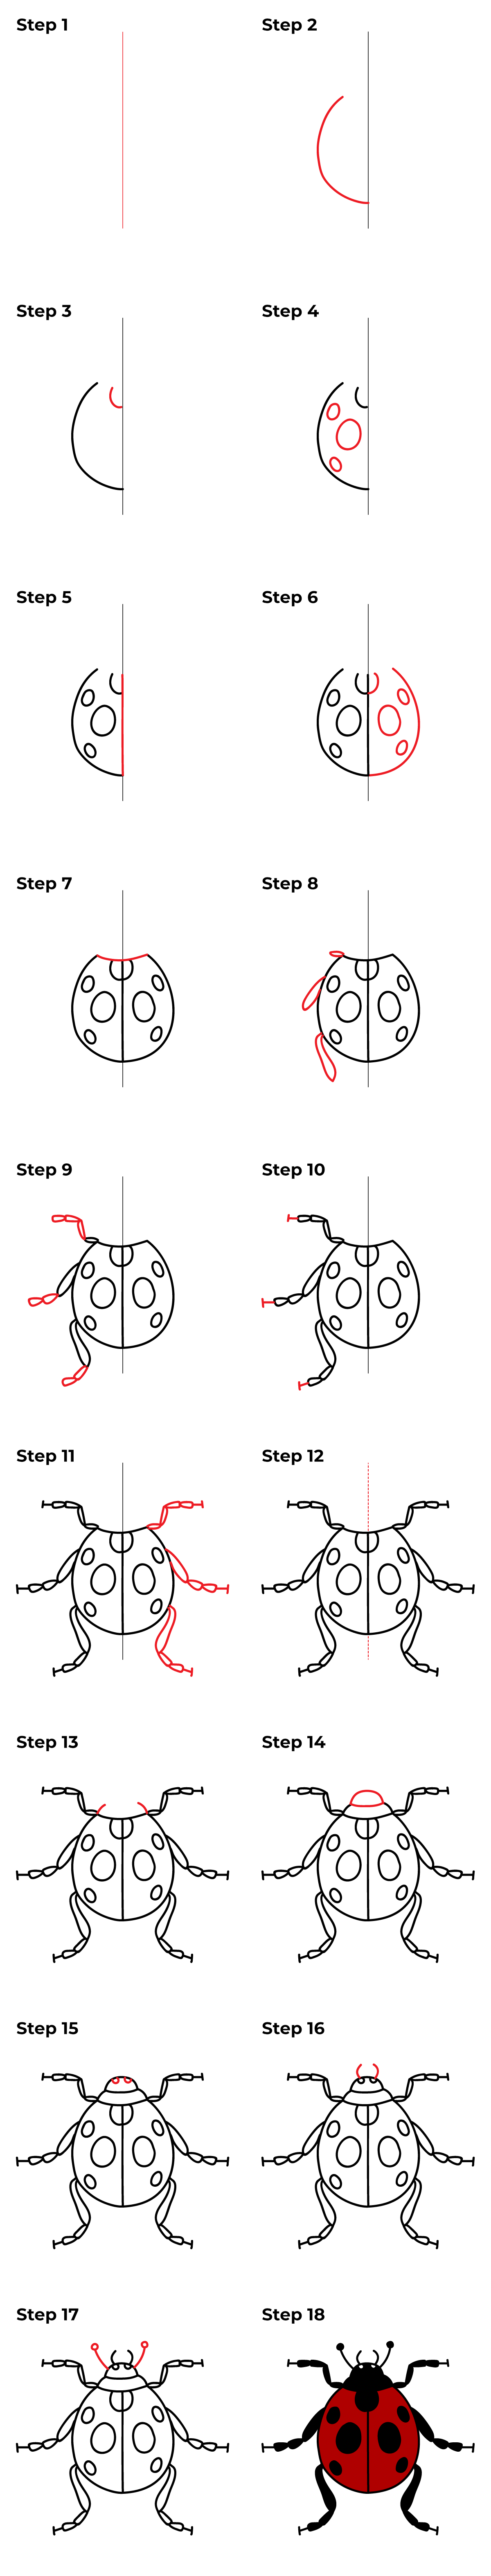 How to Draw a Ladybug - Printable Tutorial